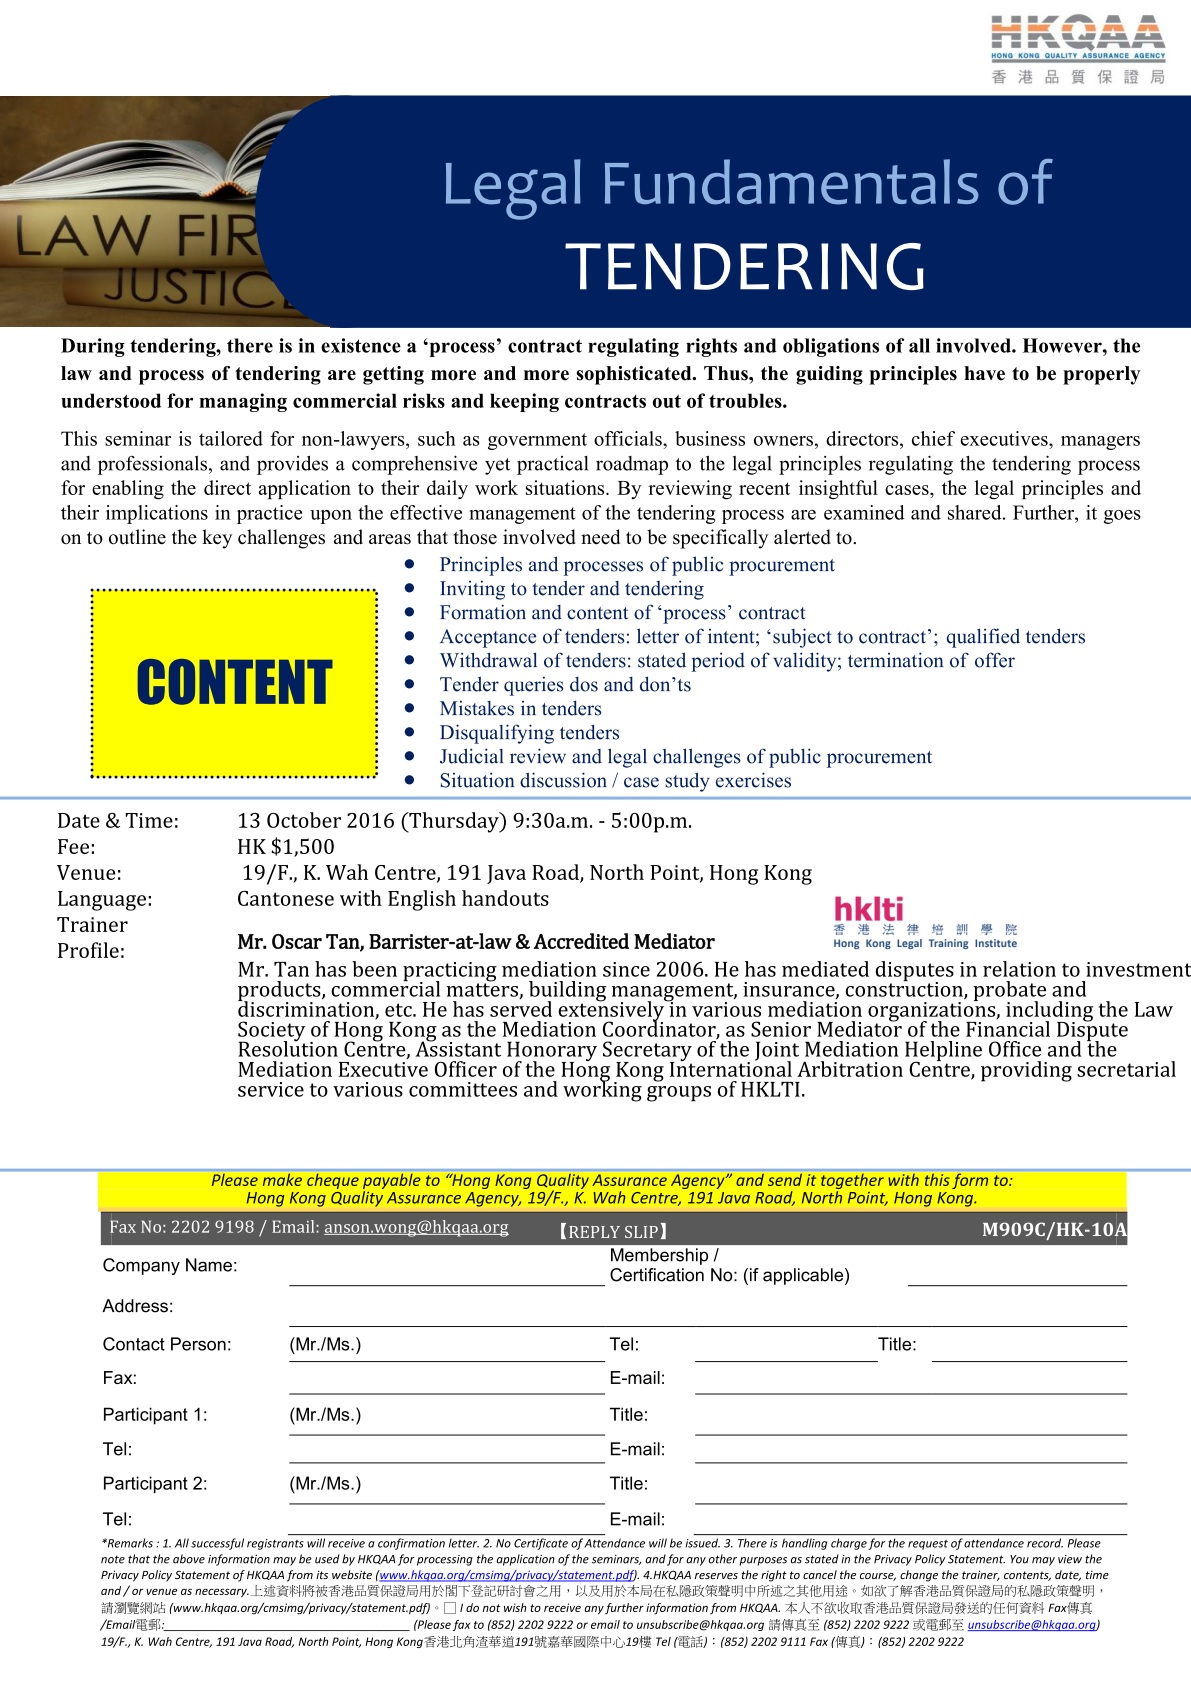 hklti hkqaa legal fundamentals of tendering 20161013